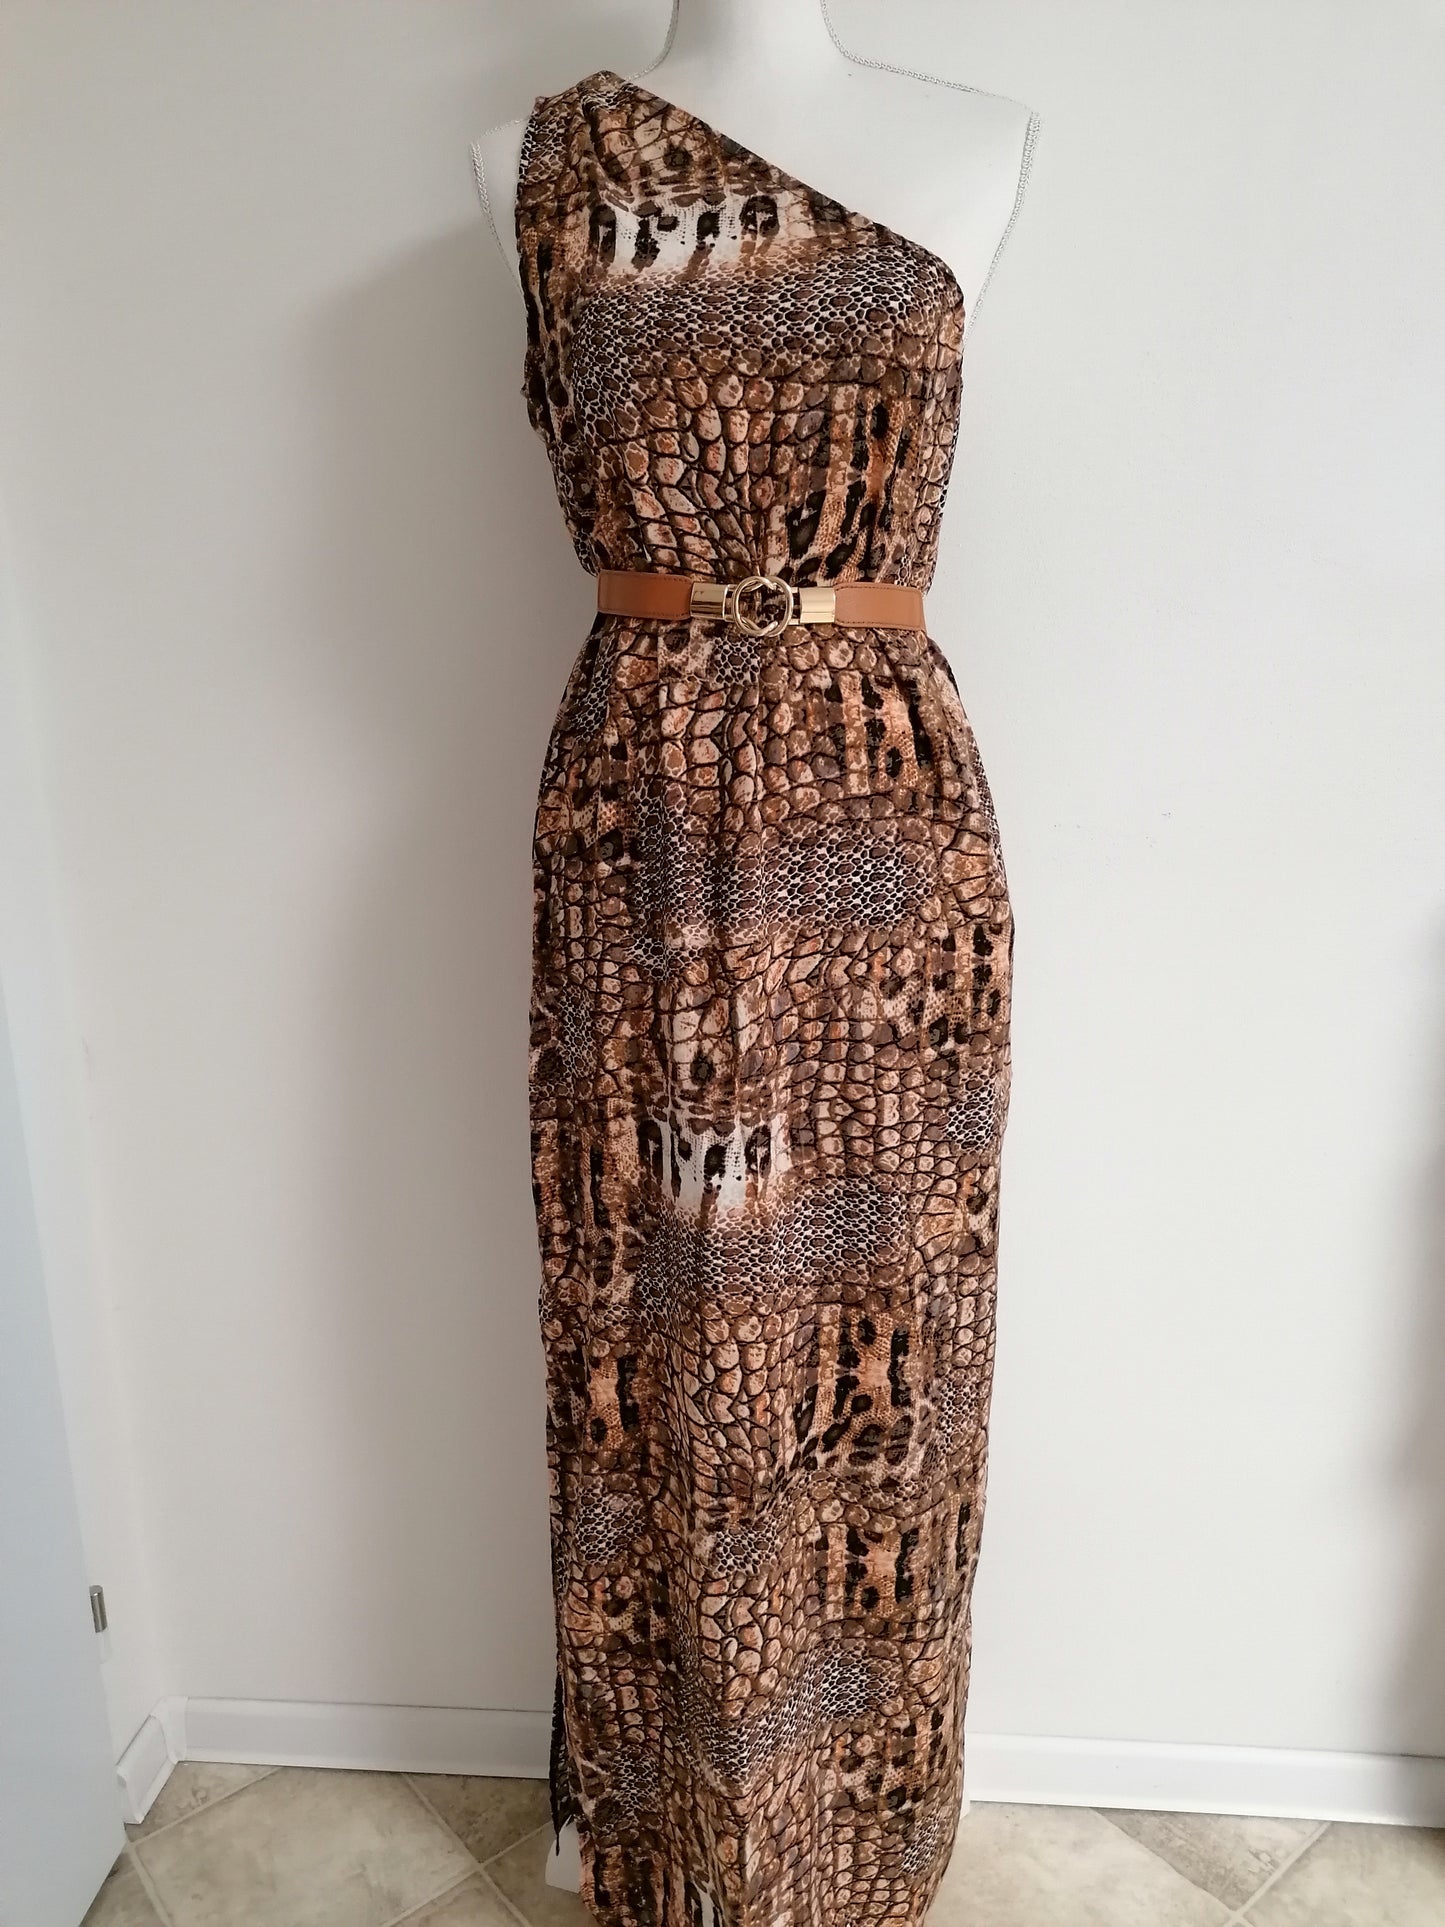 Šaty /dress /hadí vzor asymetrické na 1 rameno,velikost universální 36 až 40